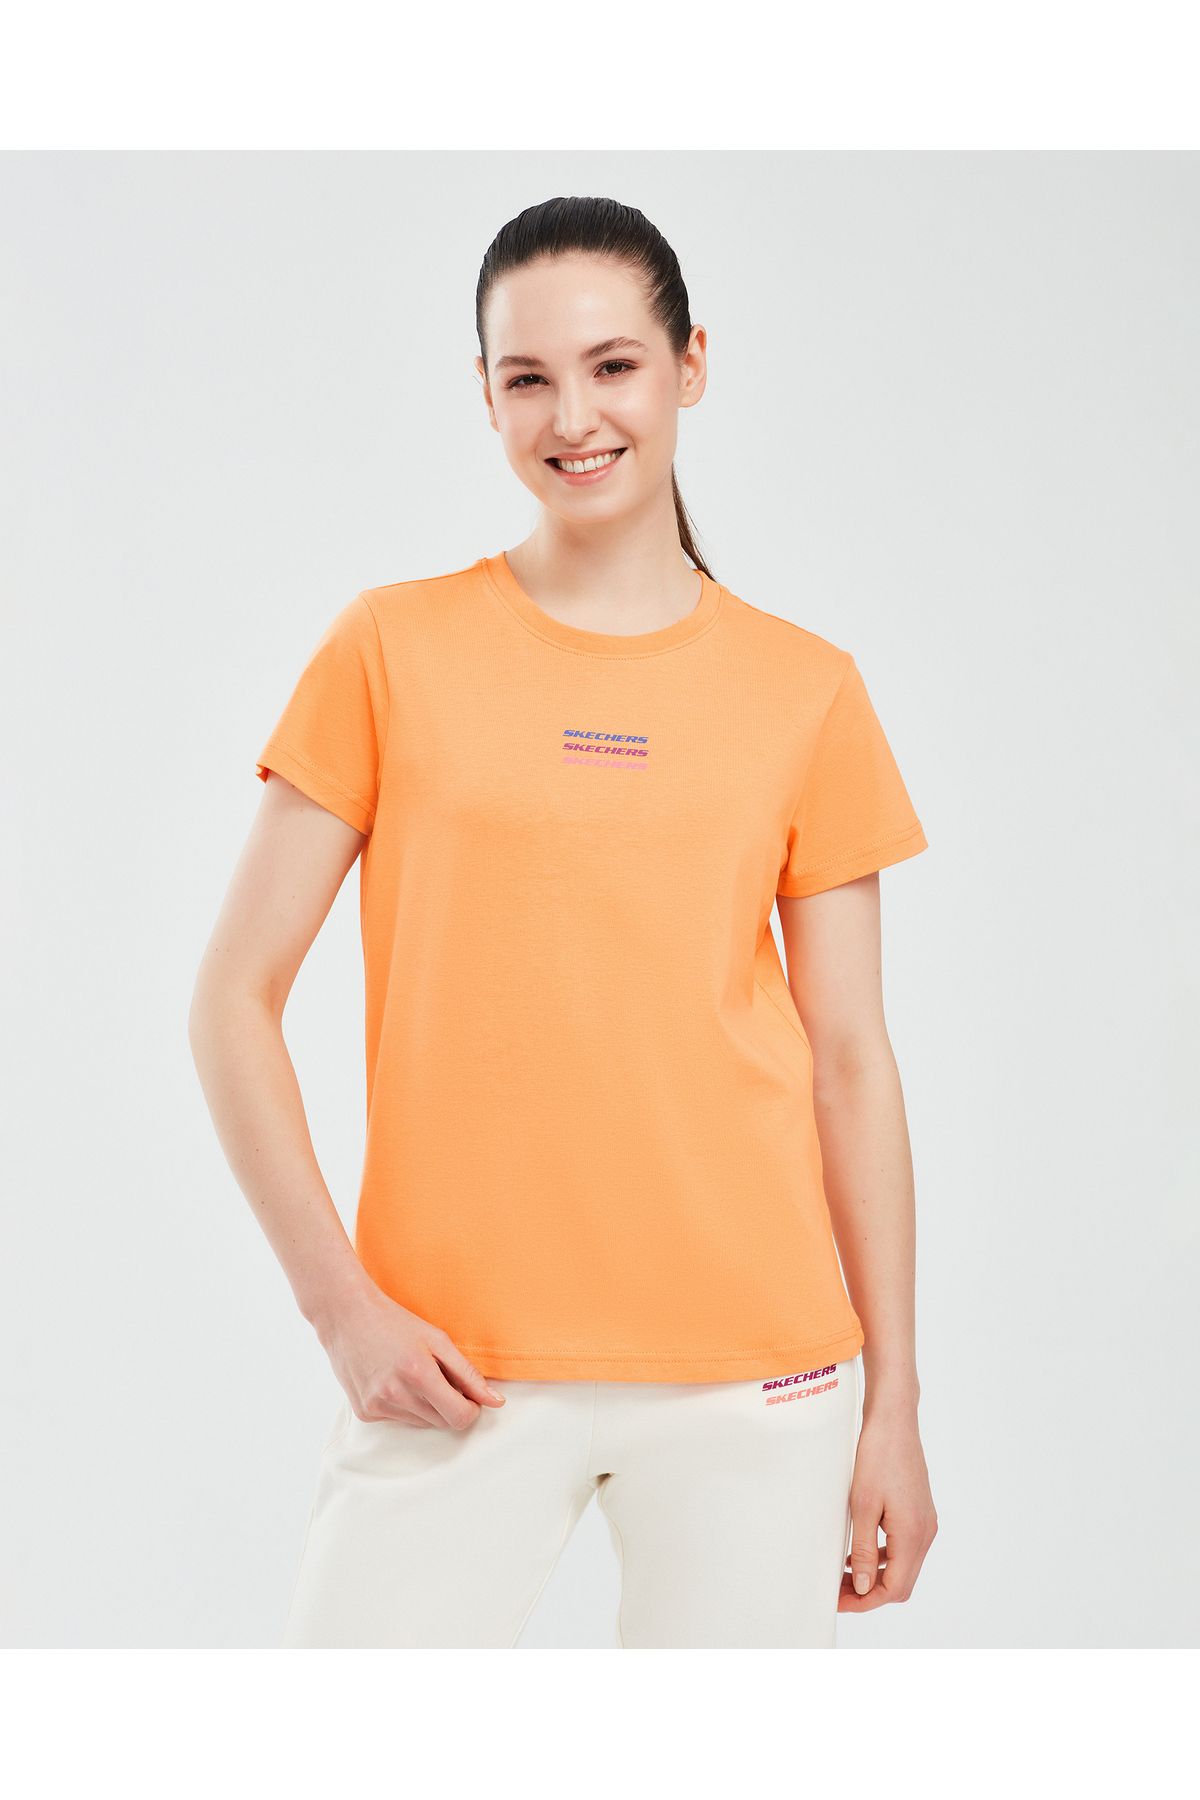 Skechers Essential W Short Sleeve T-shirt Kadın Açık Turuncu Tshirt S241006-823